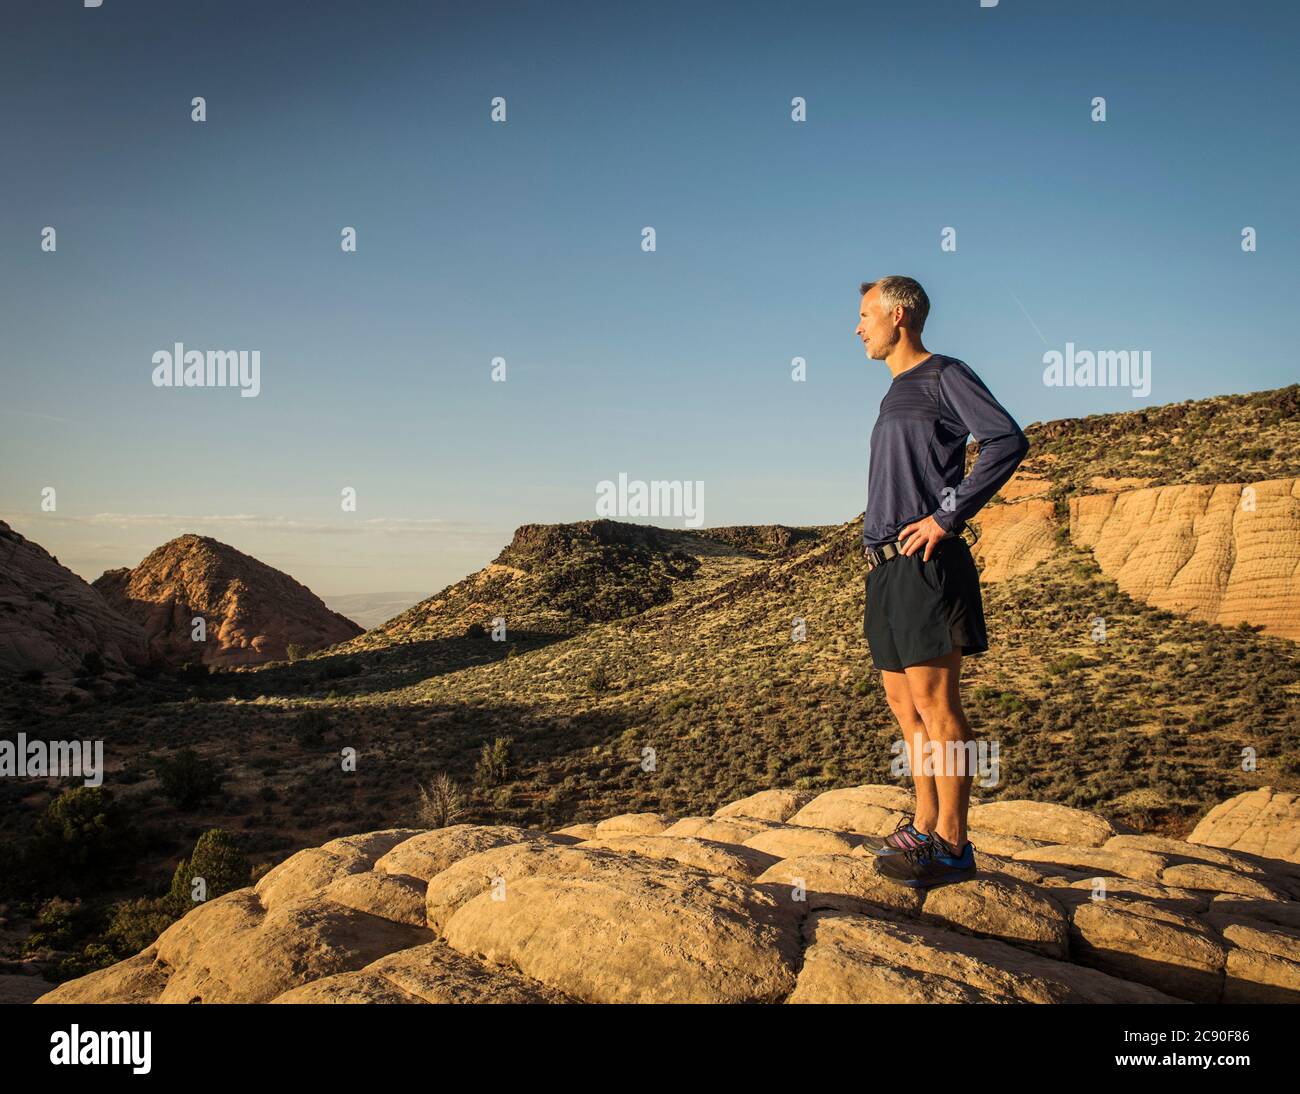 USA, Utah, St. George, Mann steht in felsiger Landschaft Stockfoto